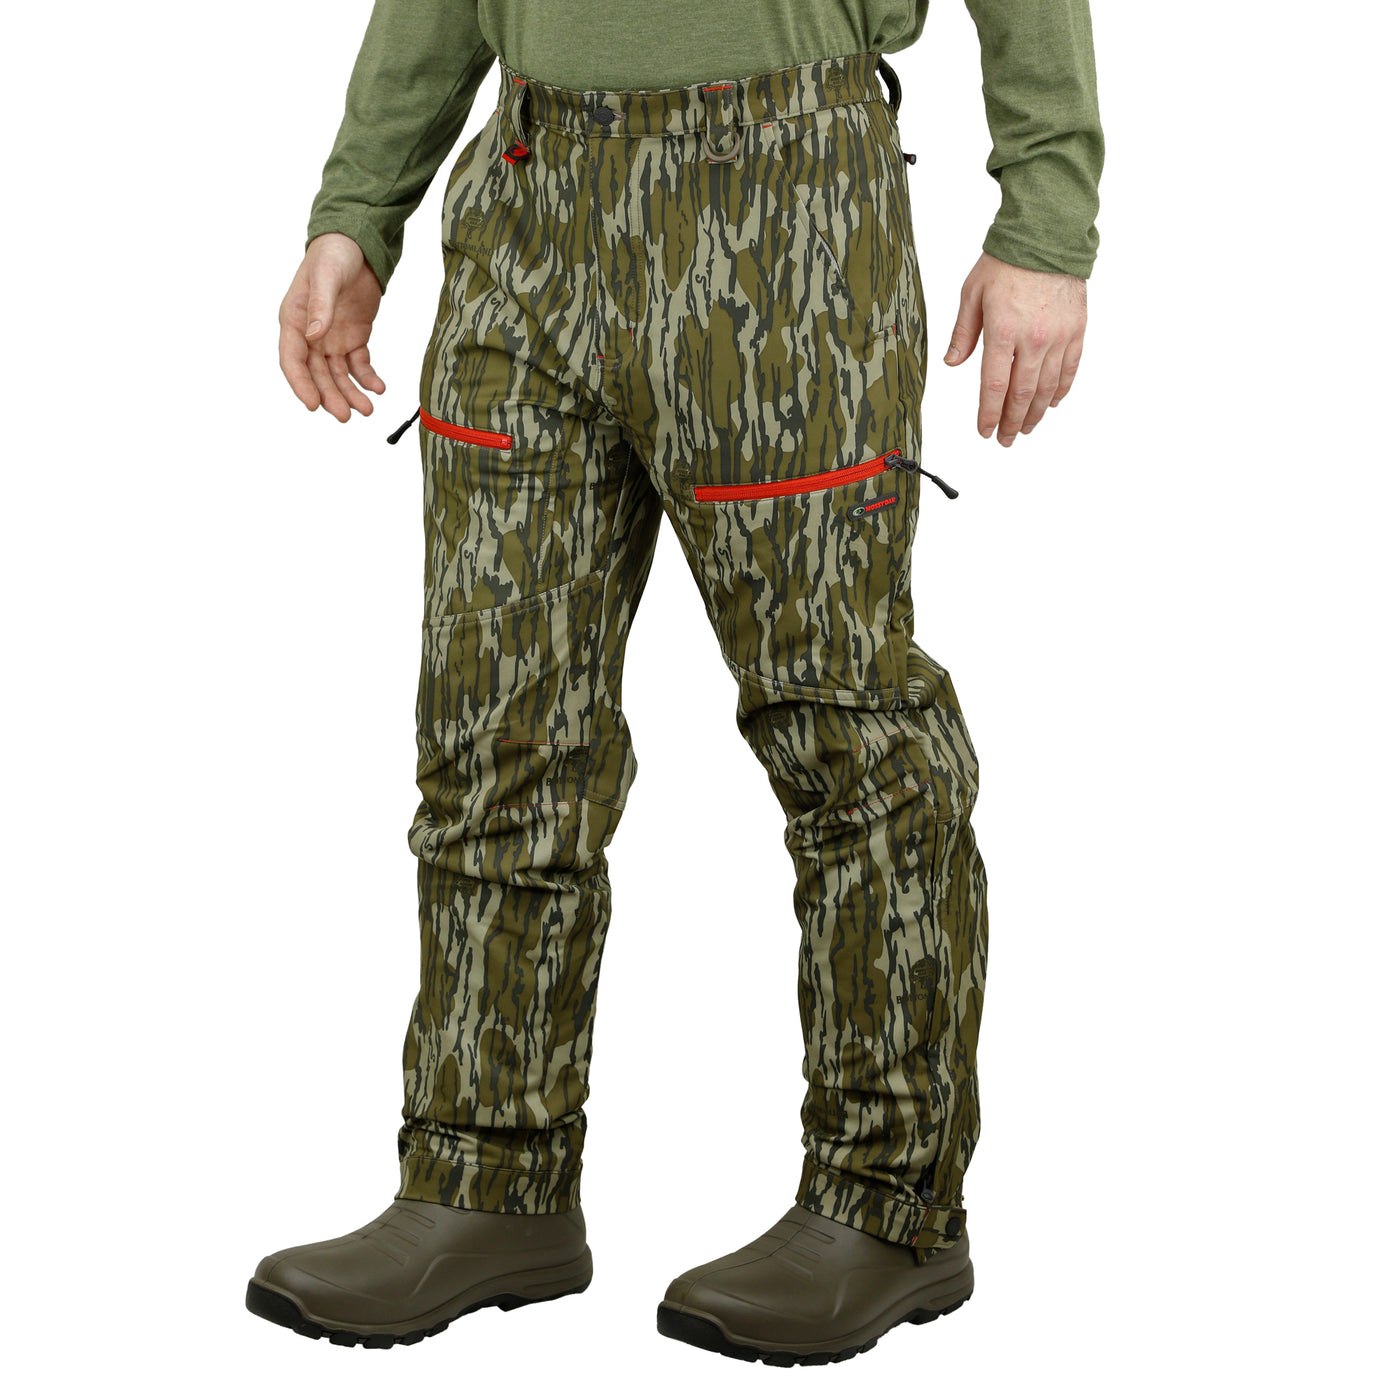 Contain Long John Hunting Pants Thermal Underwear Mossy Oak XXL